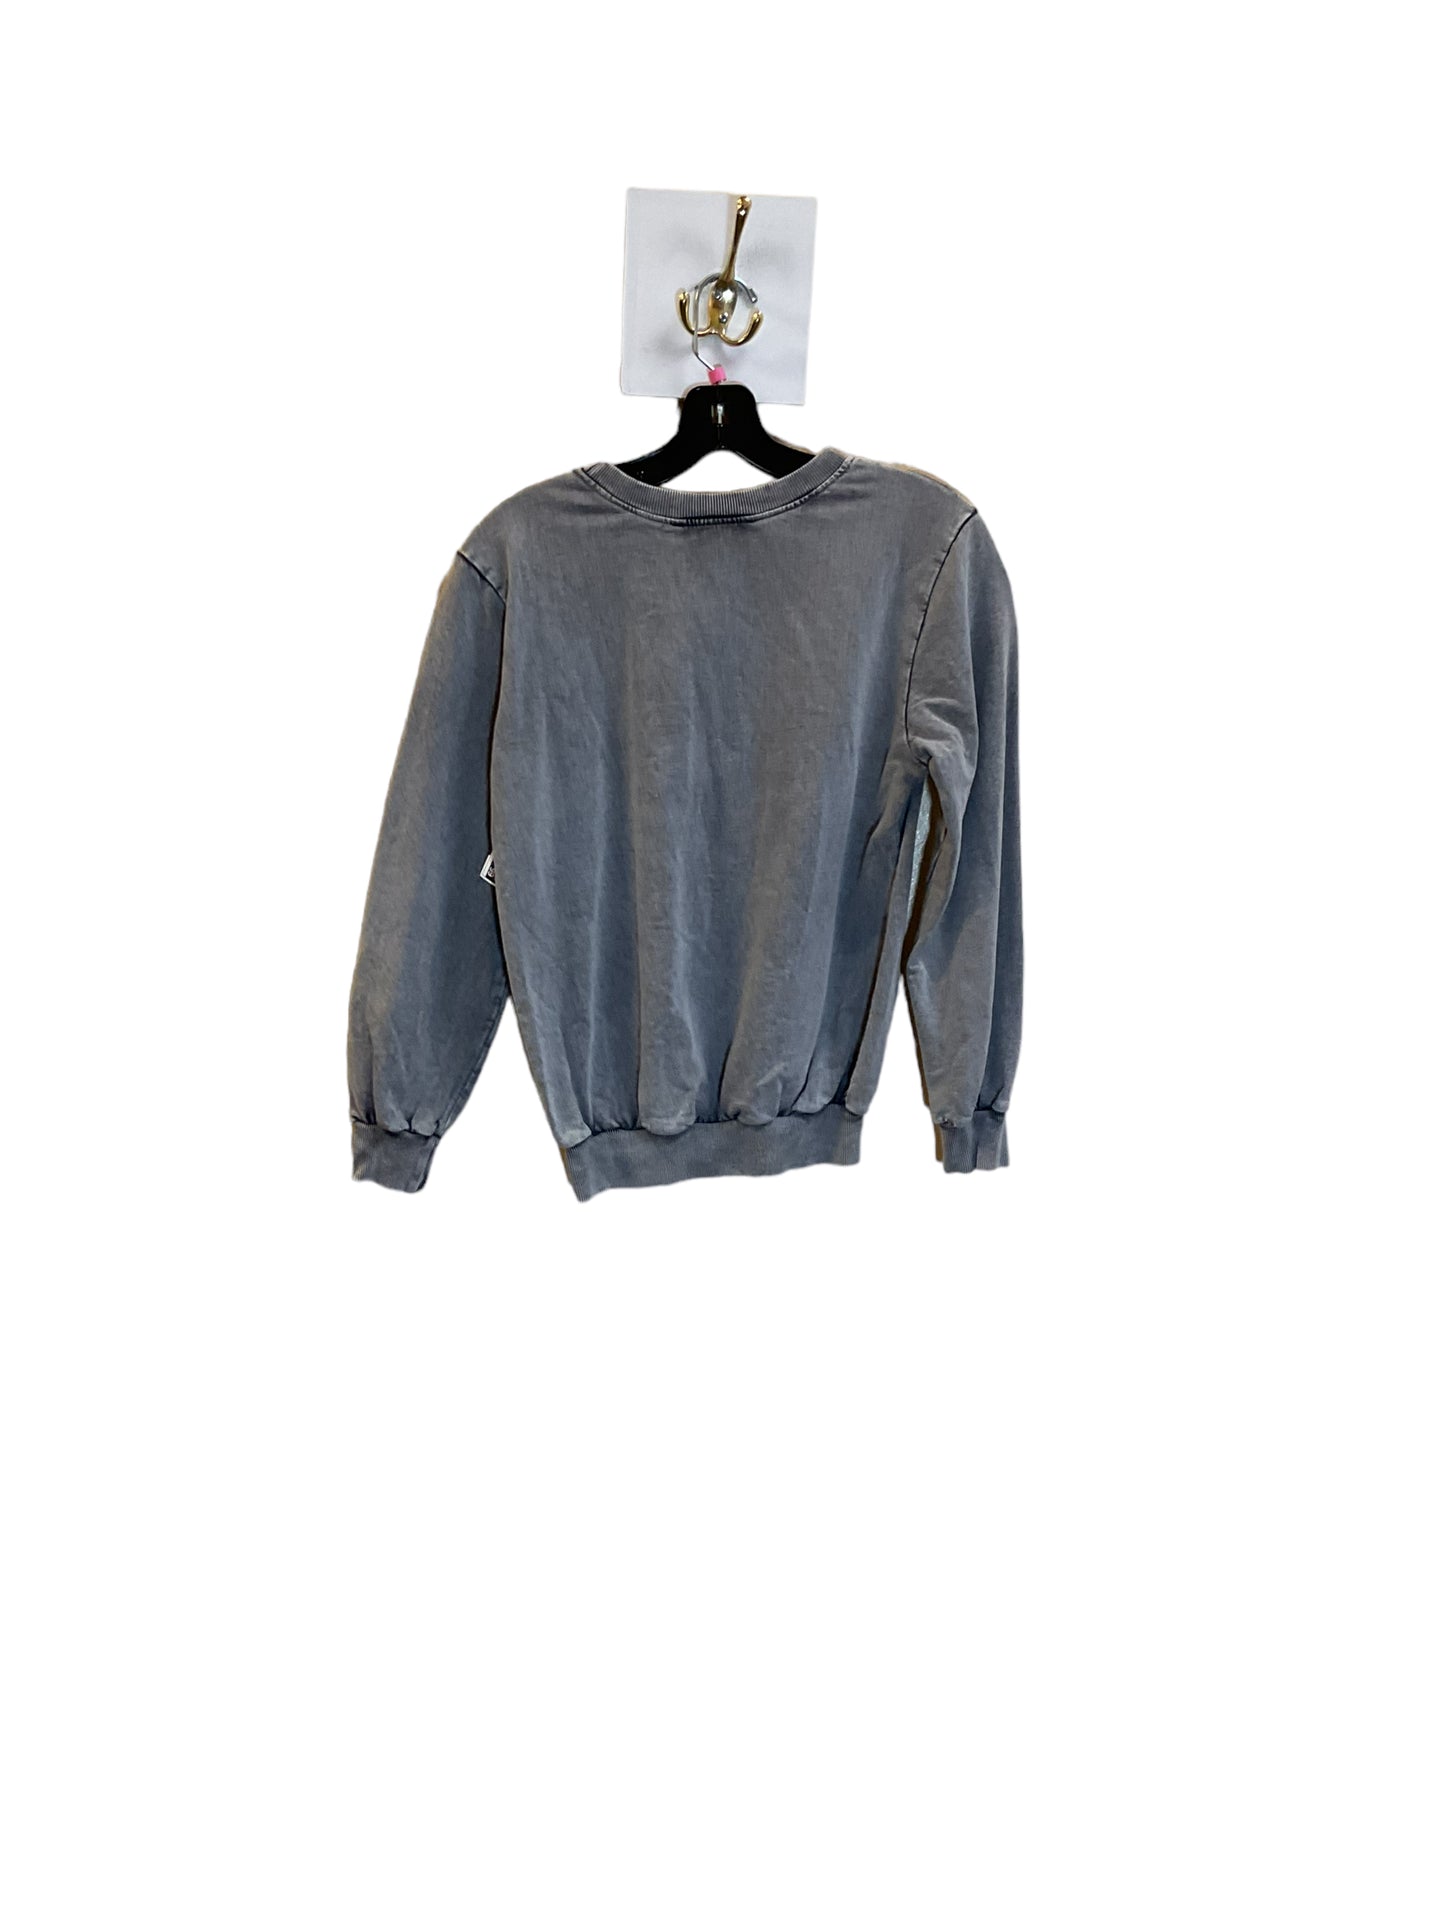 Sweatshirt Crewneck By Solitaire  Size: S